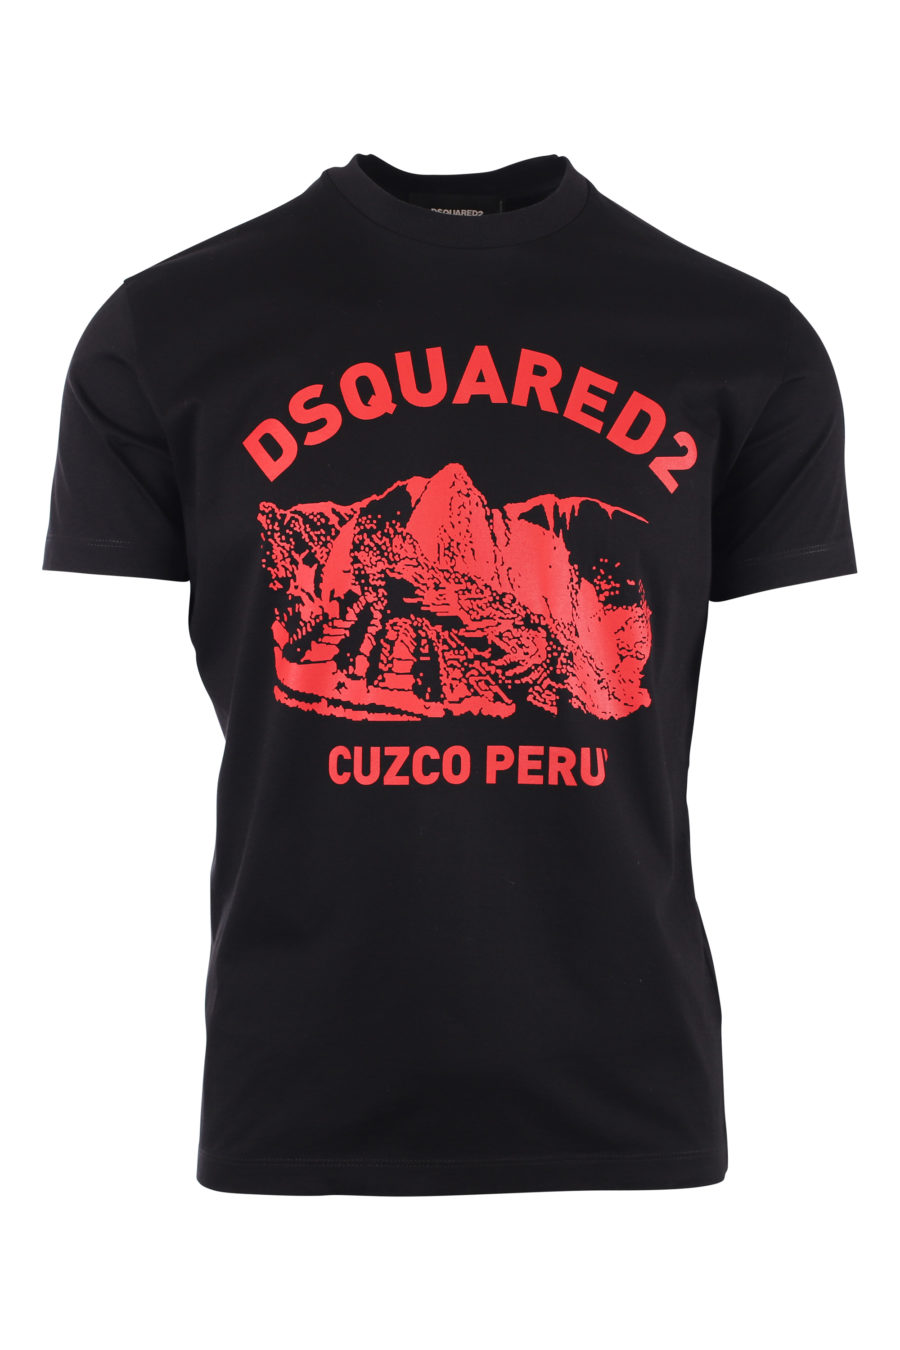 Camiseta negra con logo rojo "cuzco peru" - IMG 9734